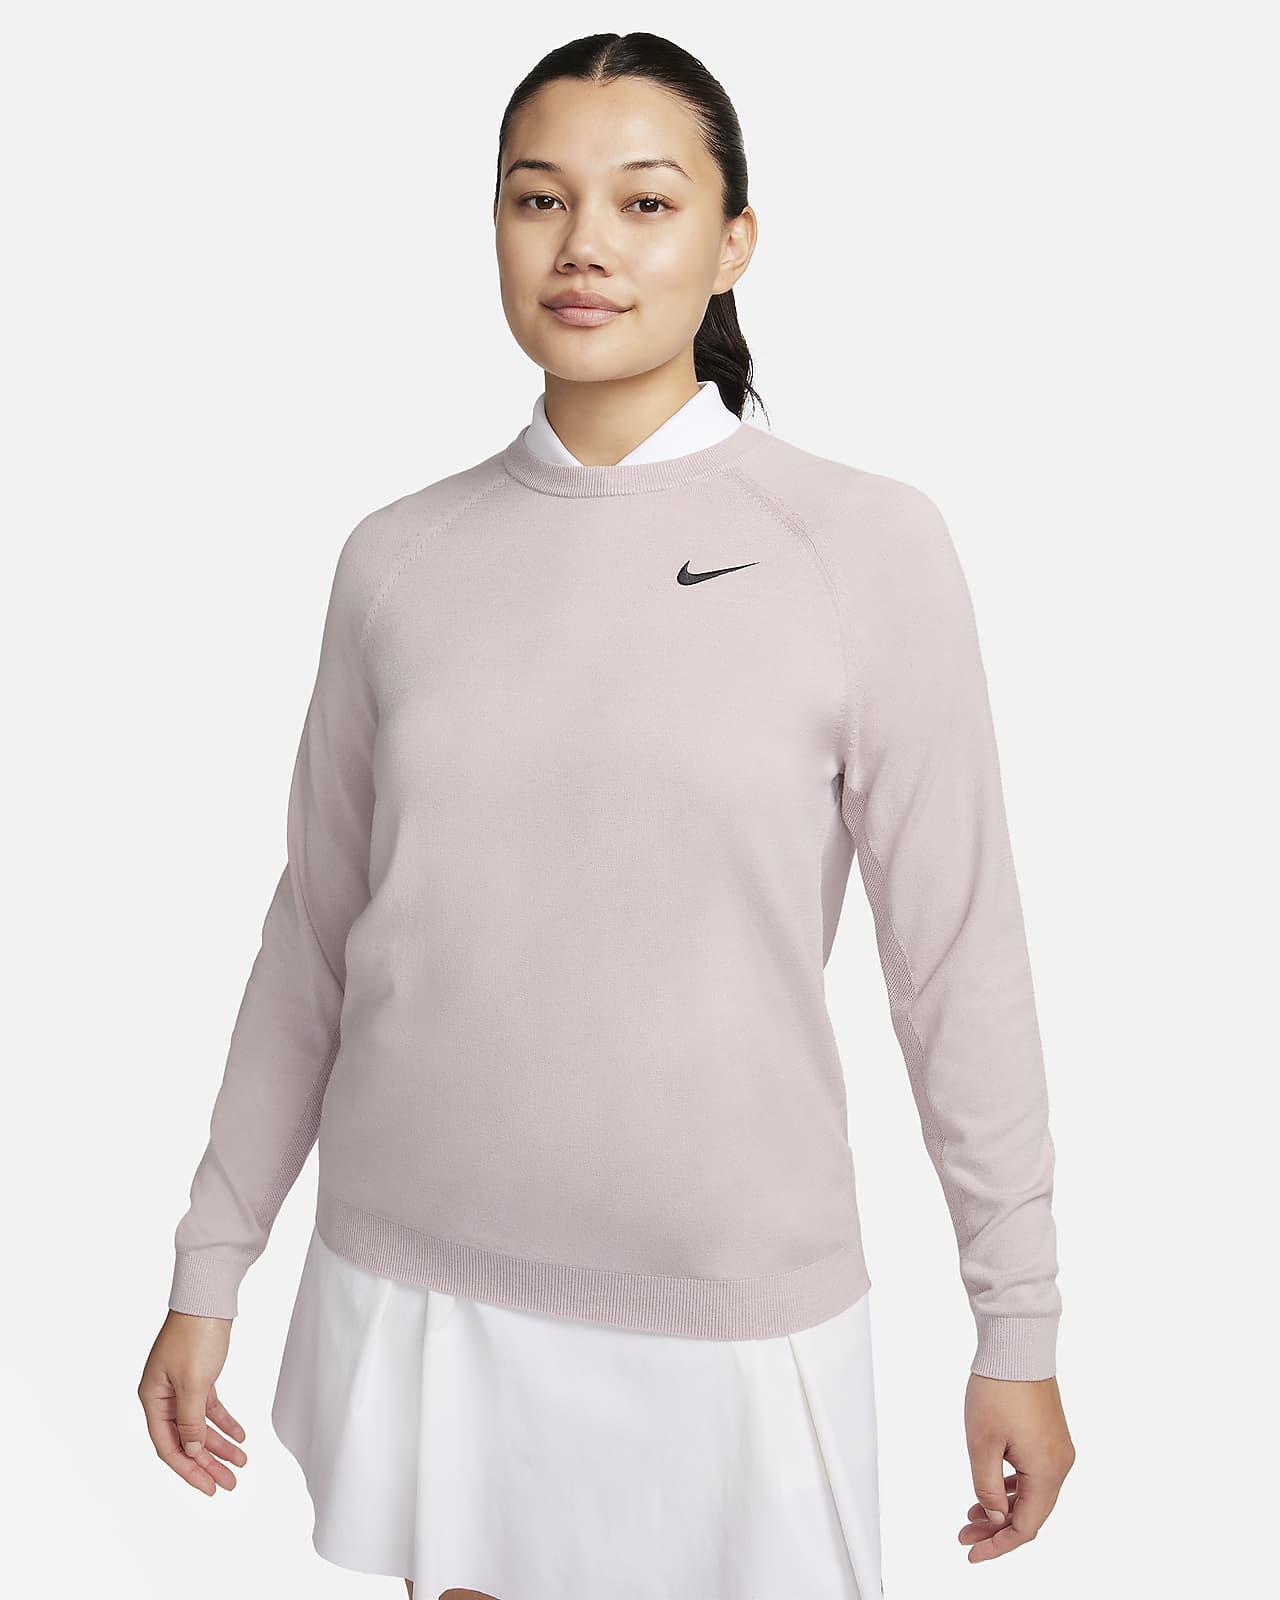 NEW! Plus Size ladies tennis & golf skorts - Pink Golf Tees